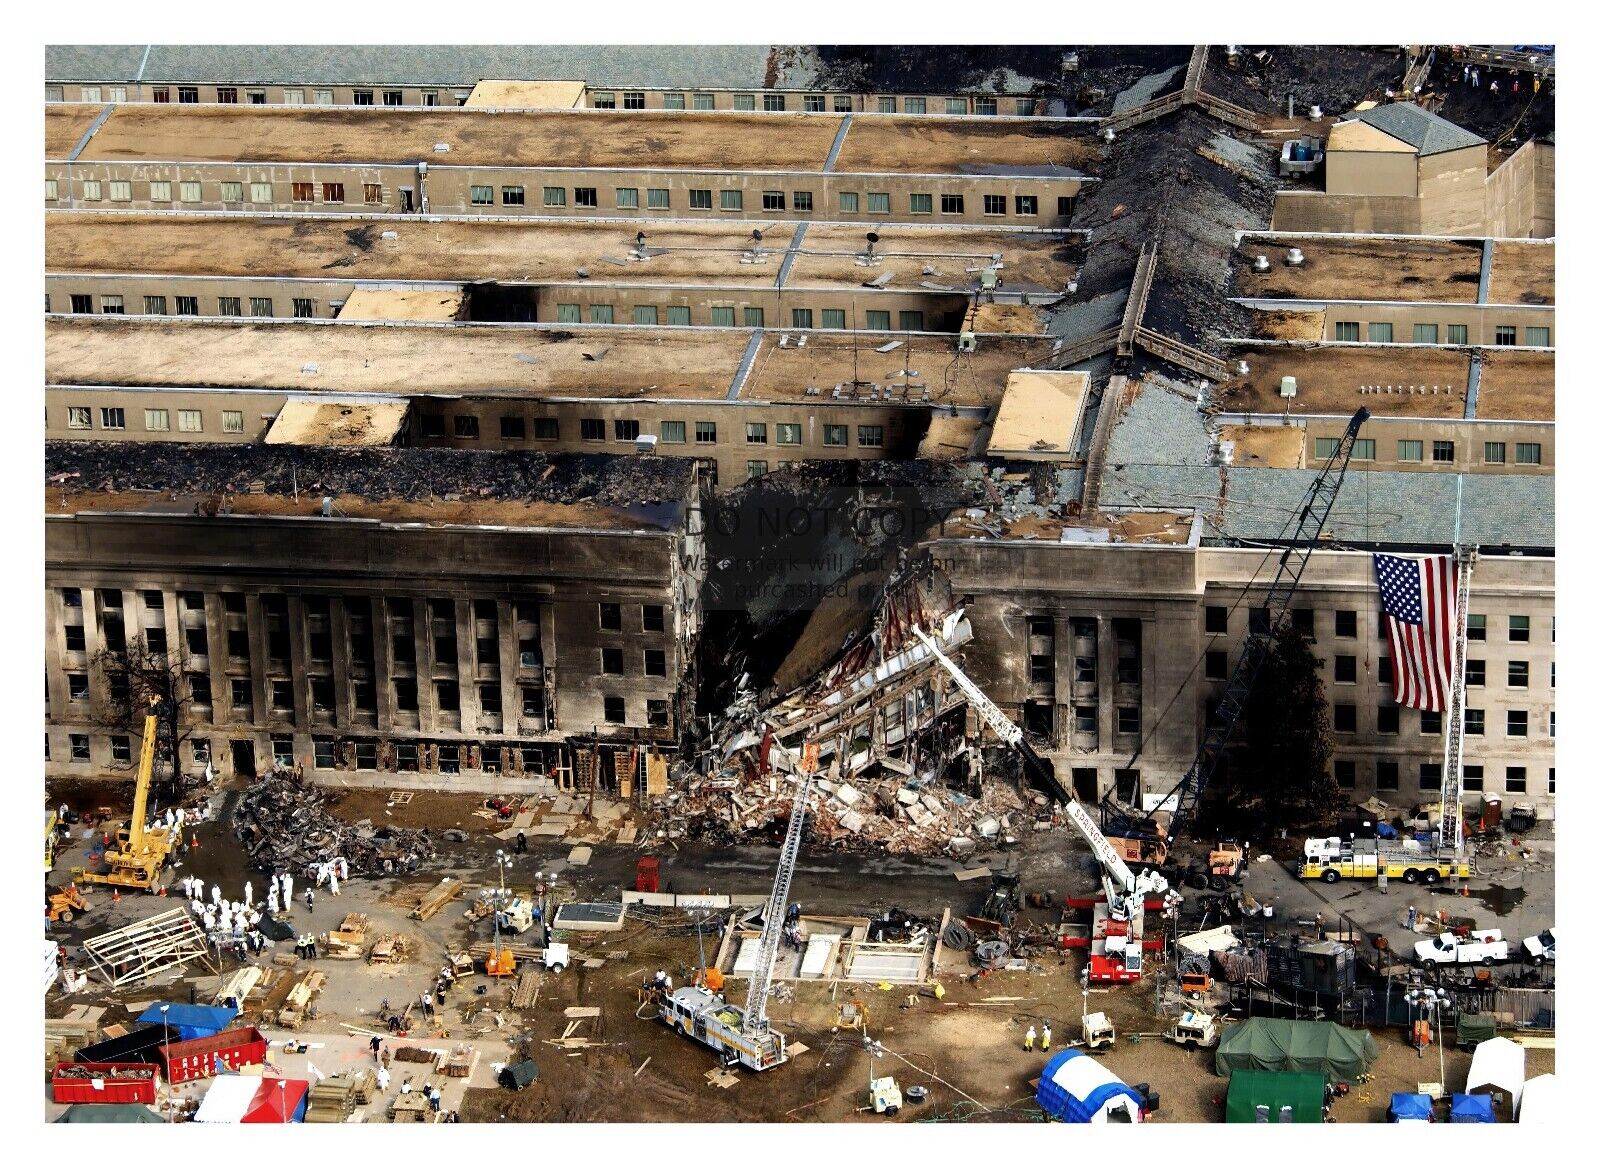 PENTAGON 9/11 TERRORIST ATTACK BUIDLING HEAVILY DAMAGED 5X7 PHOTOGRAPH REPRINT